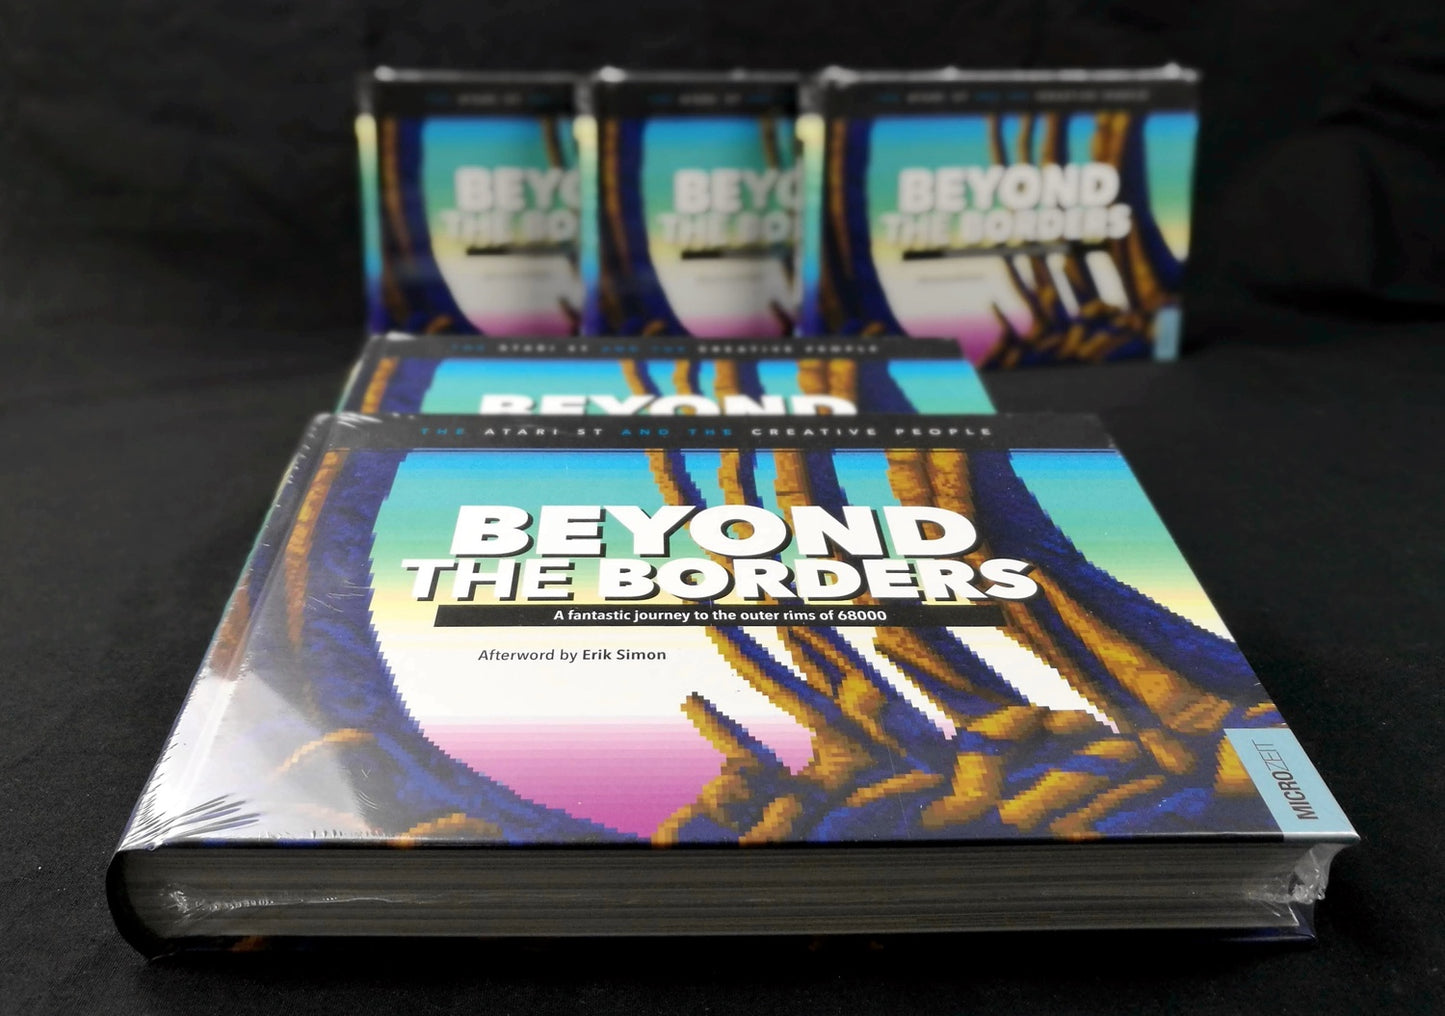 BEYOND THE BORDERS – Atari ST volume 2